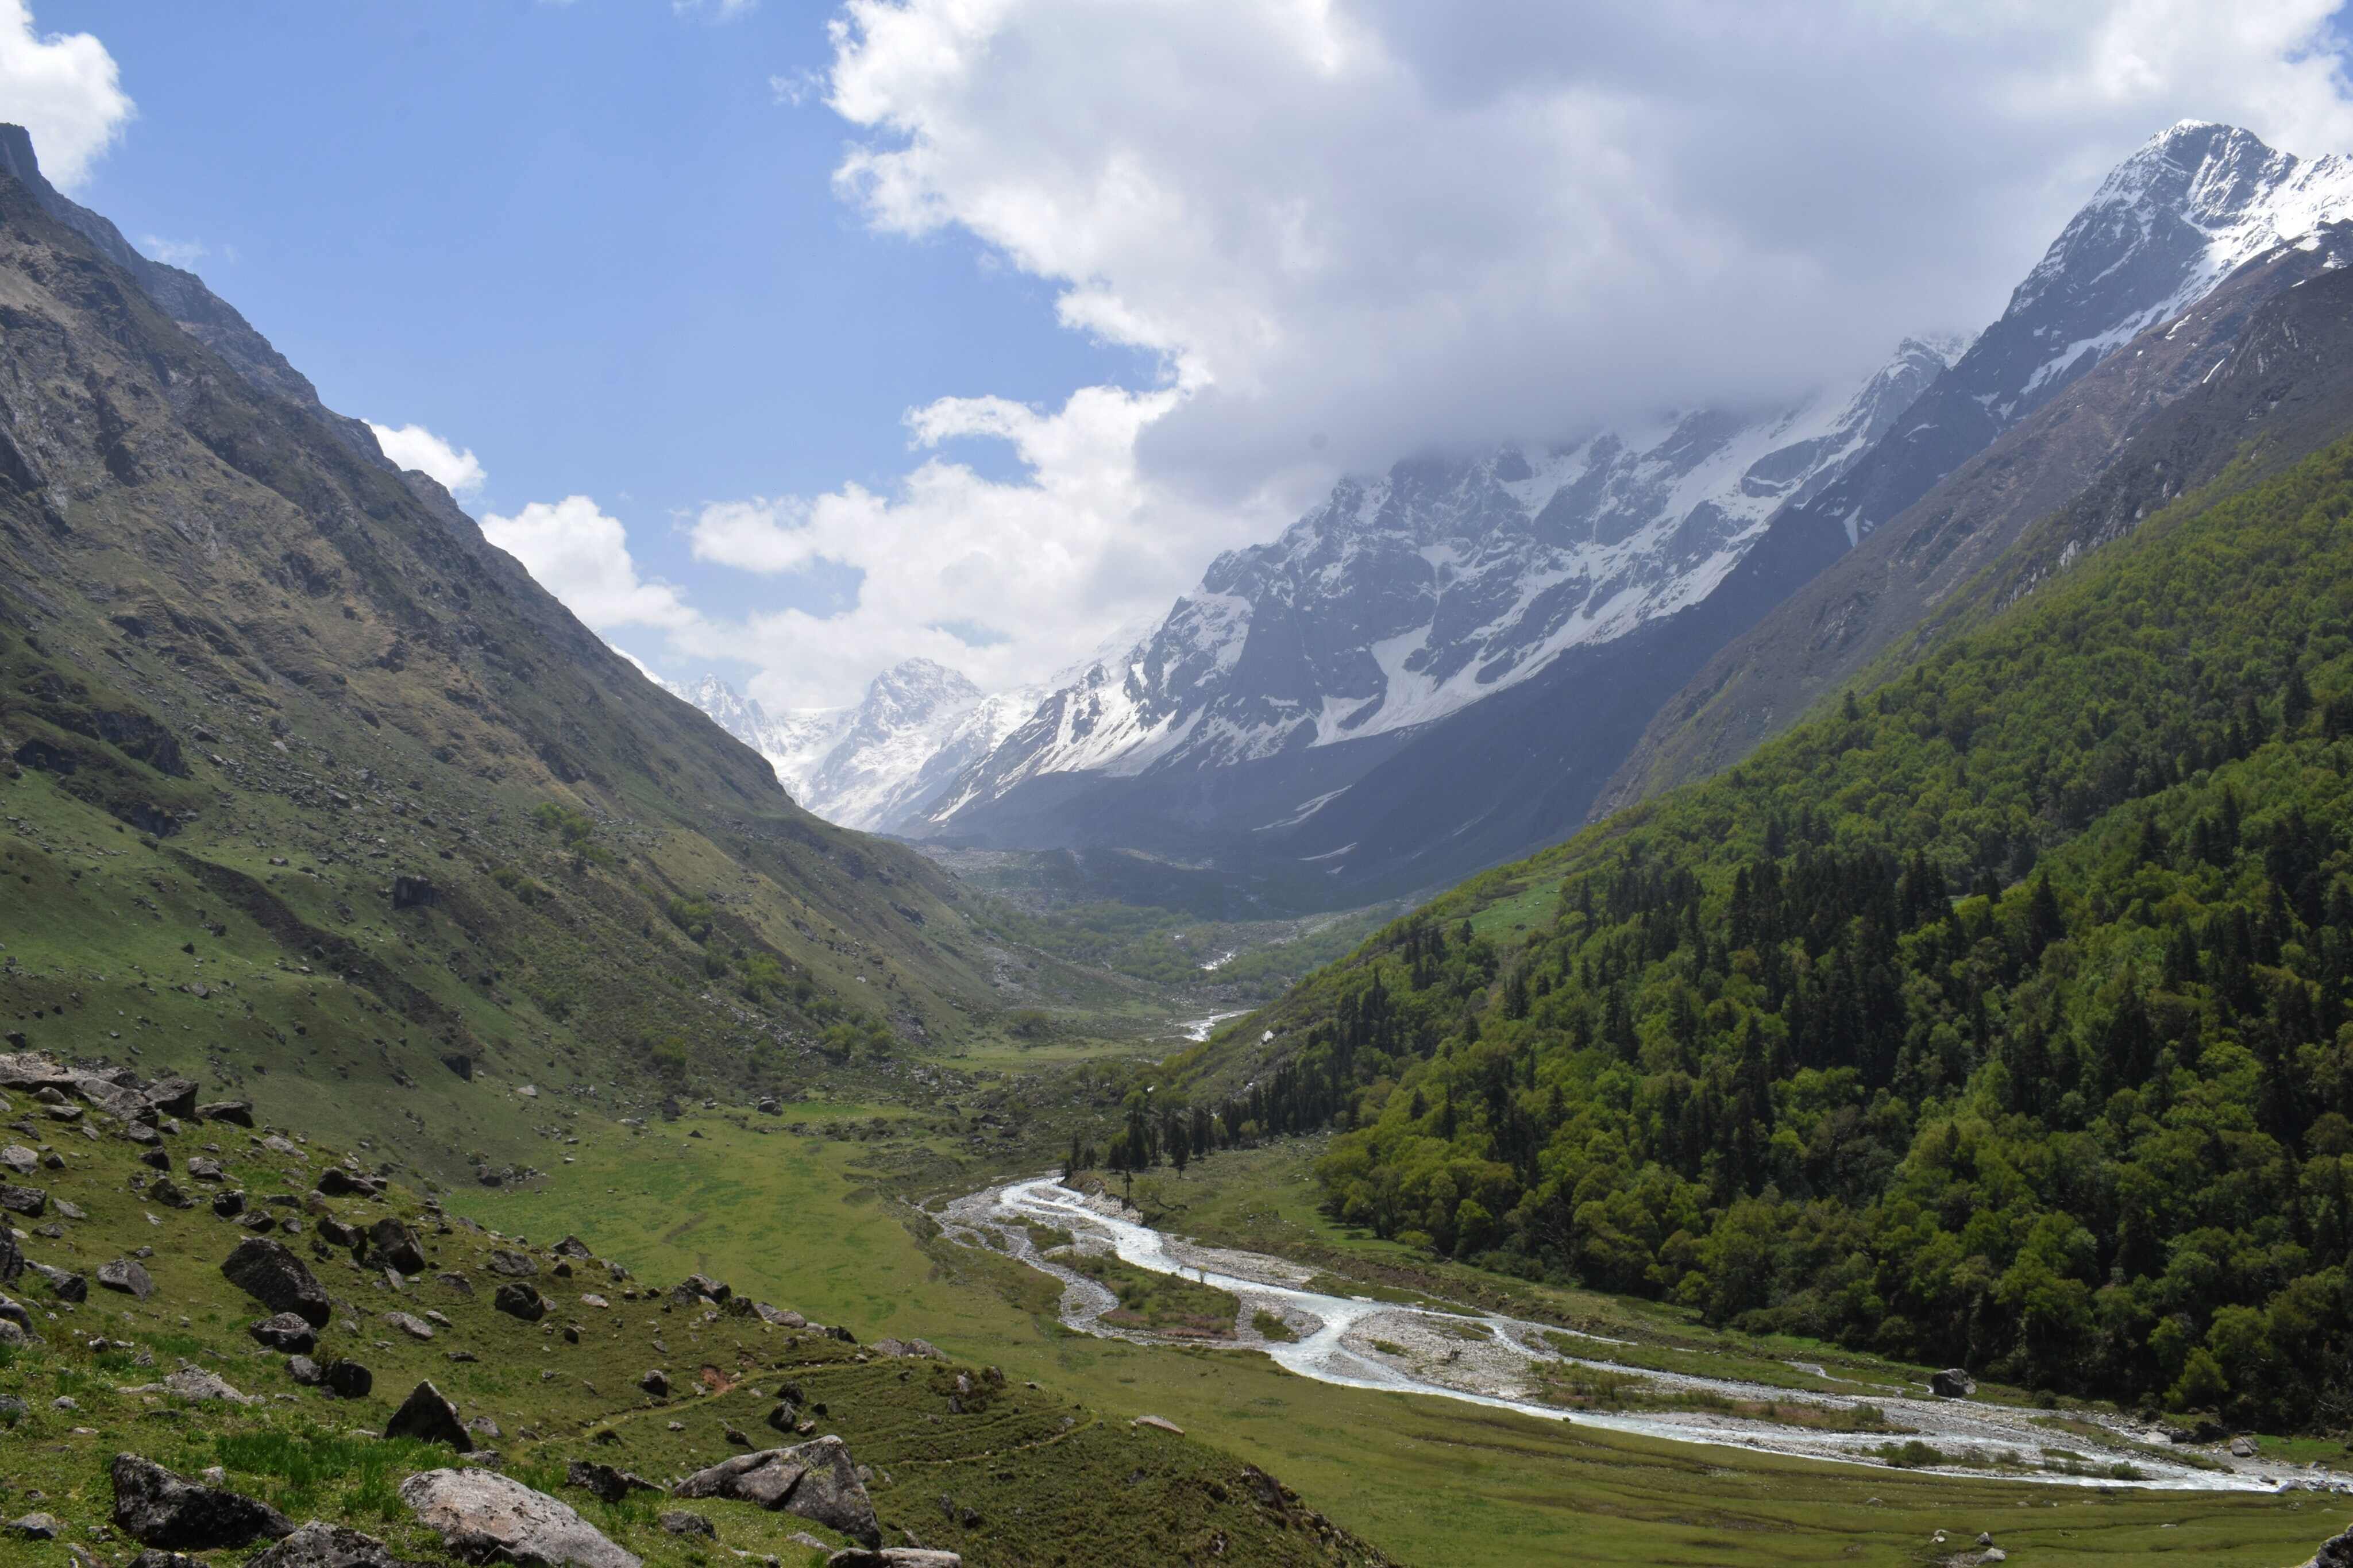 Embark on a Sacred Journey: Har Ki Doon Trek - Explore the Majestic Valley of Gods